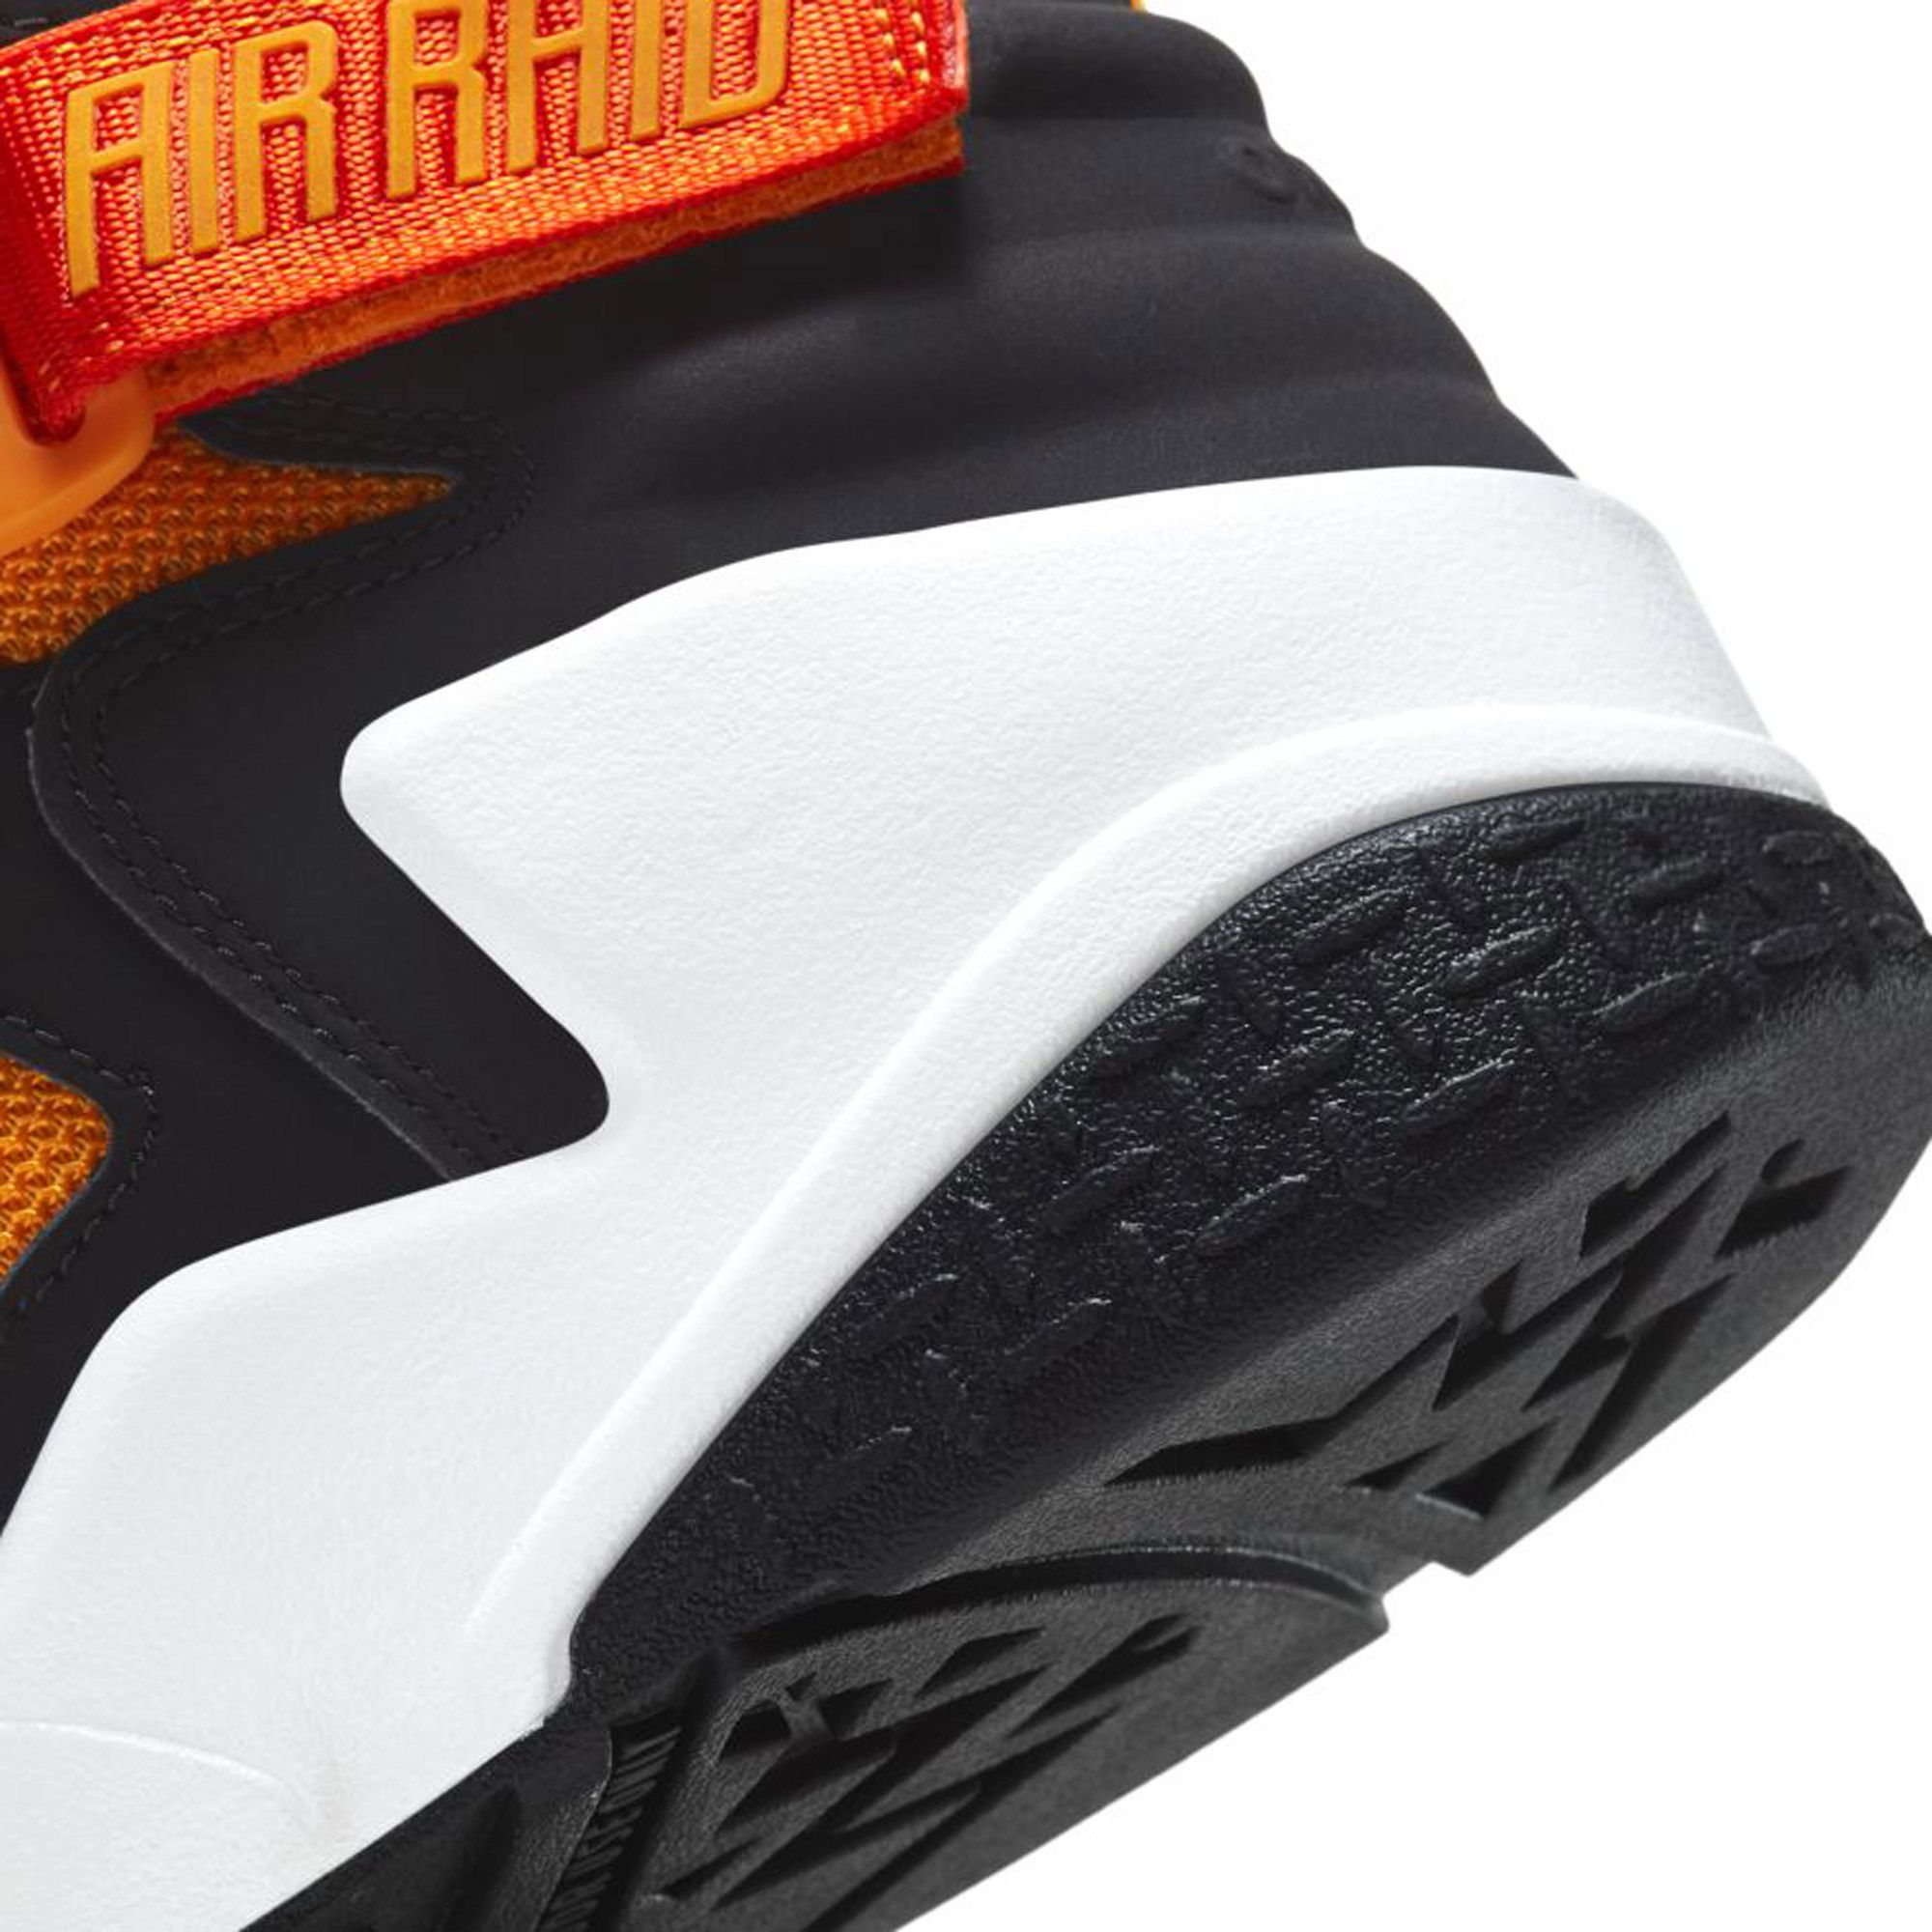 Nike Air Raid OG Shoes Sz 7.5 Black Grey Trainers Retro Basketball Sneakers  NEW